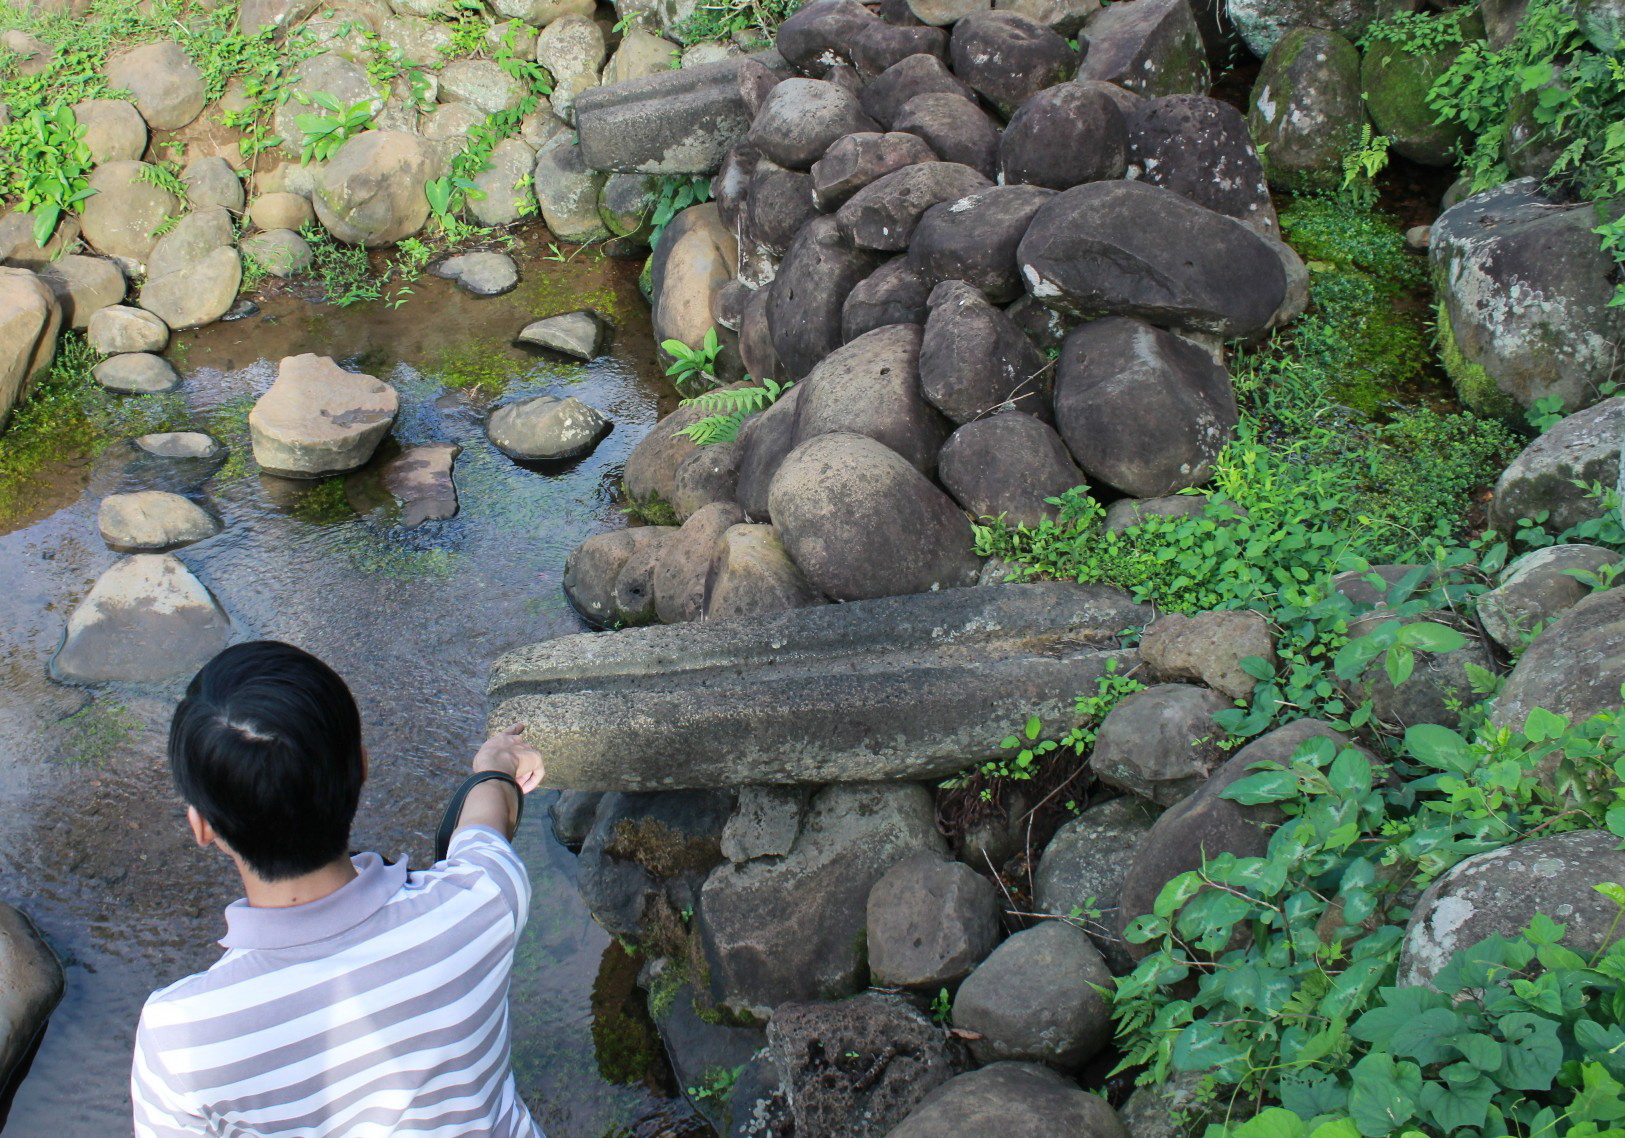 Millennium-old well system in central Vietnam dries up, requires restoration